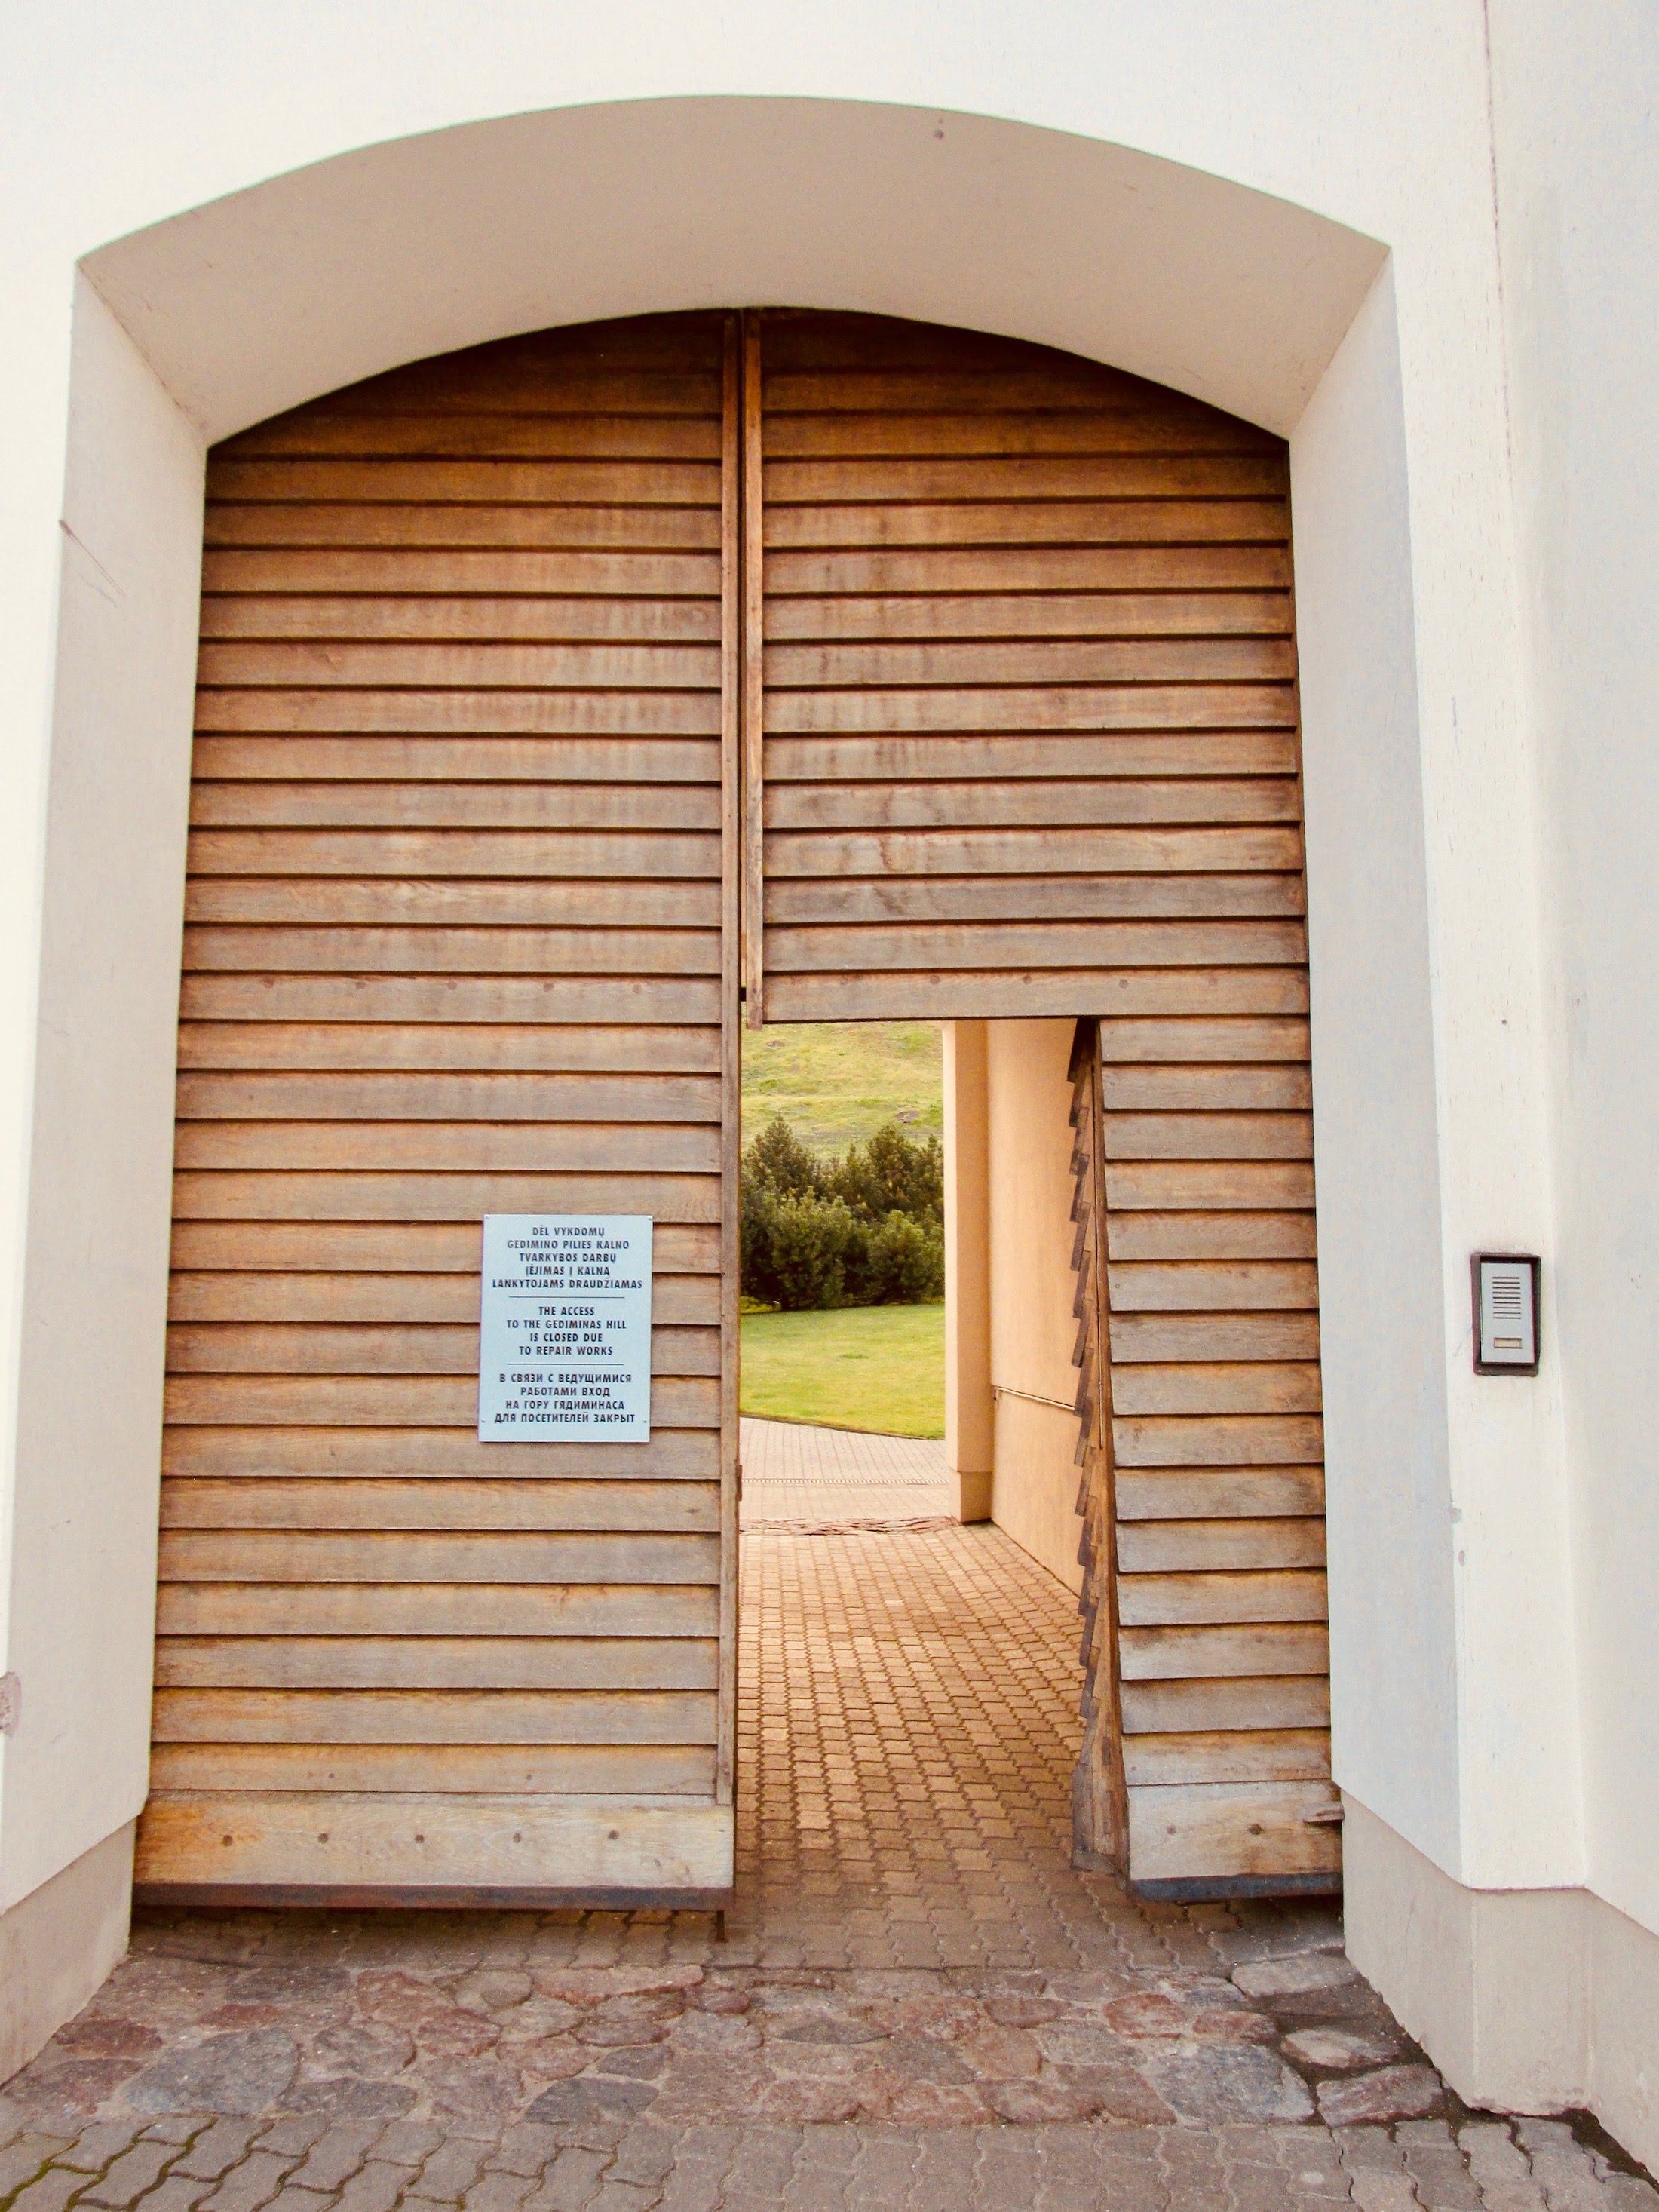 Entrance into Gediminas Hill